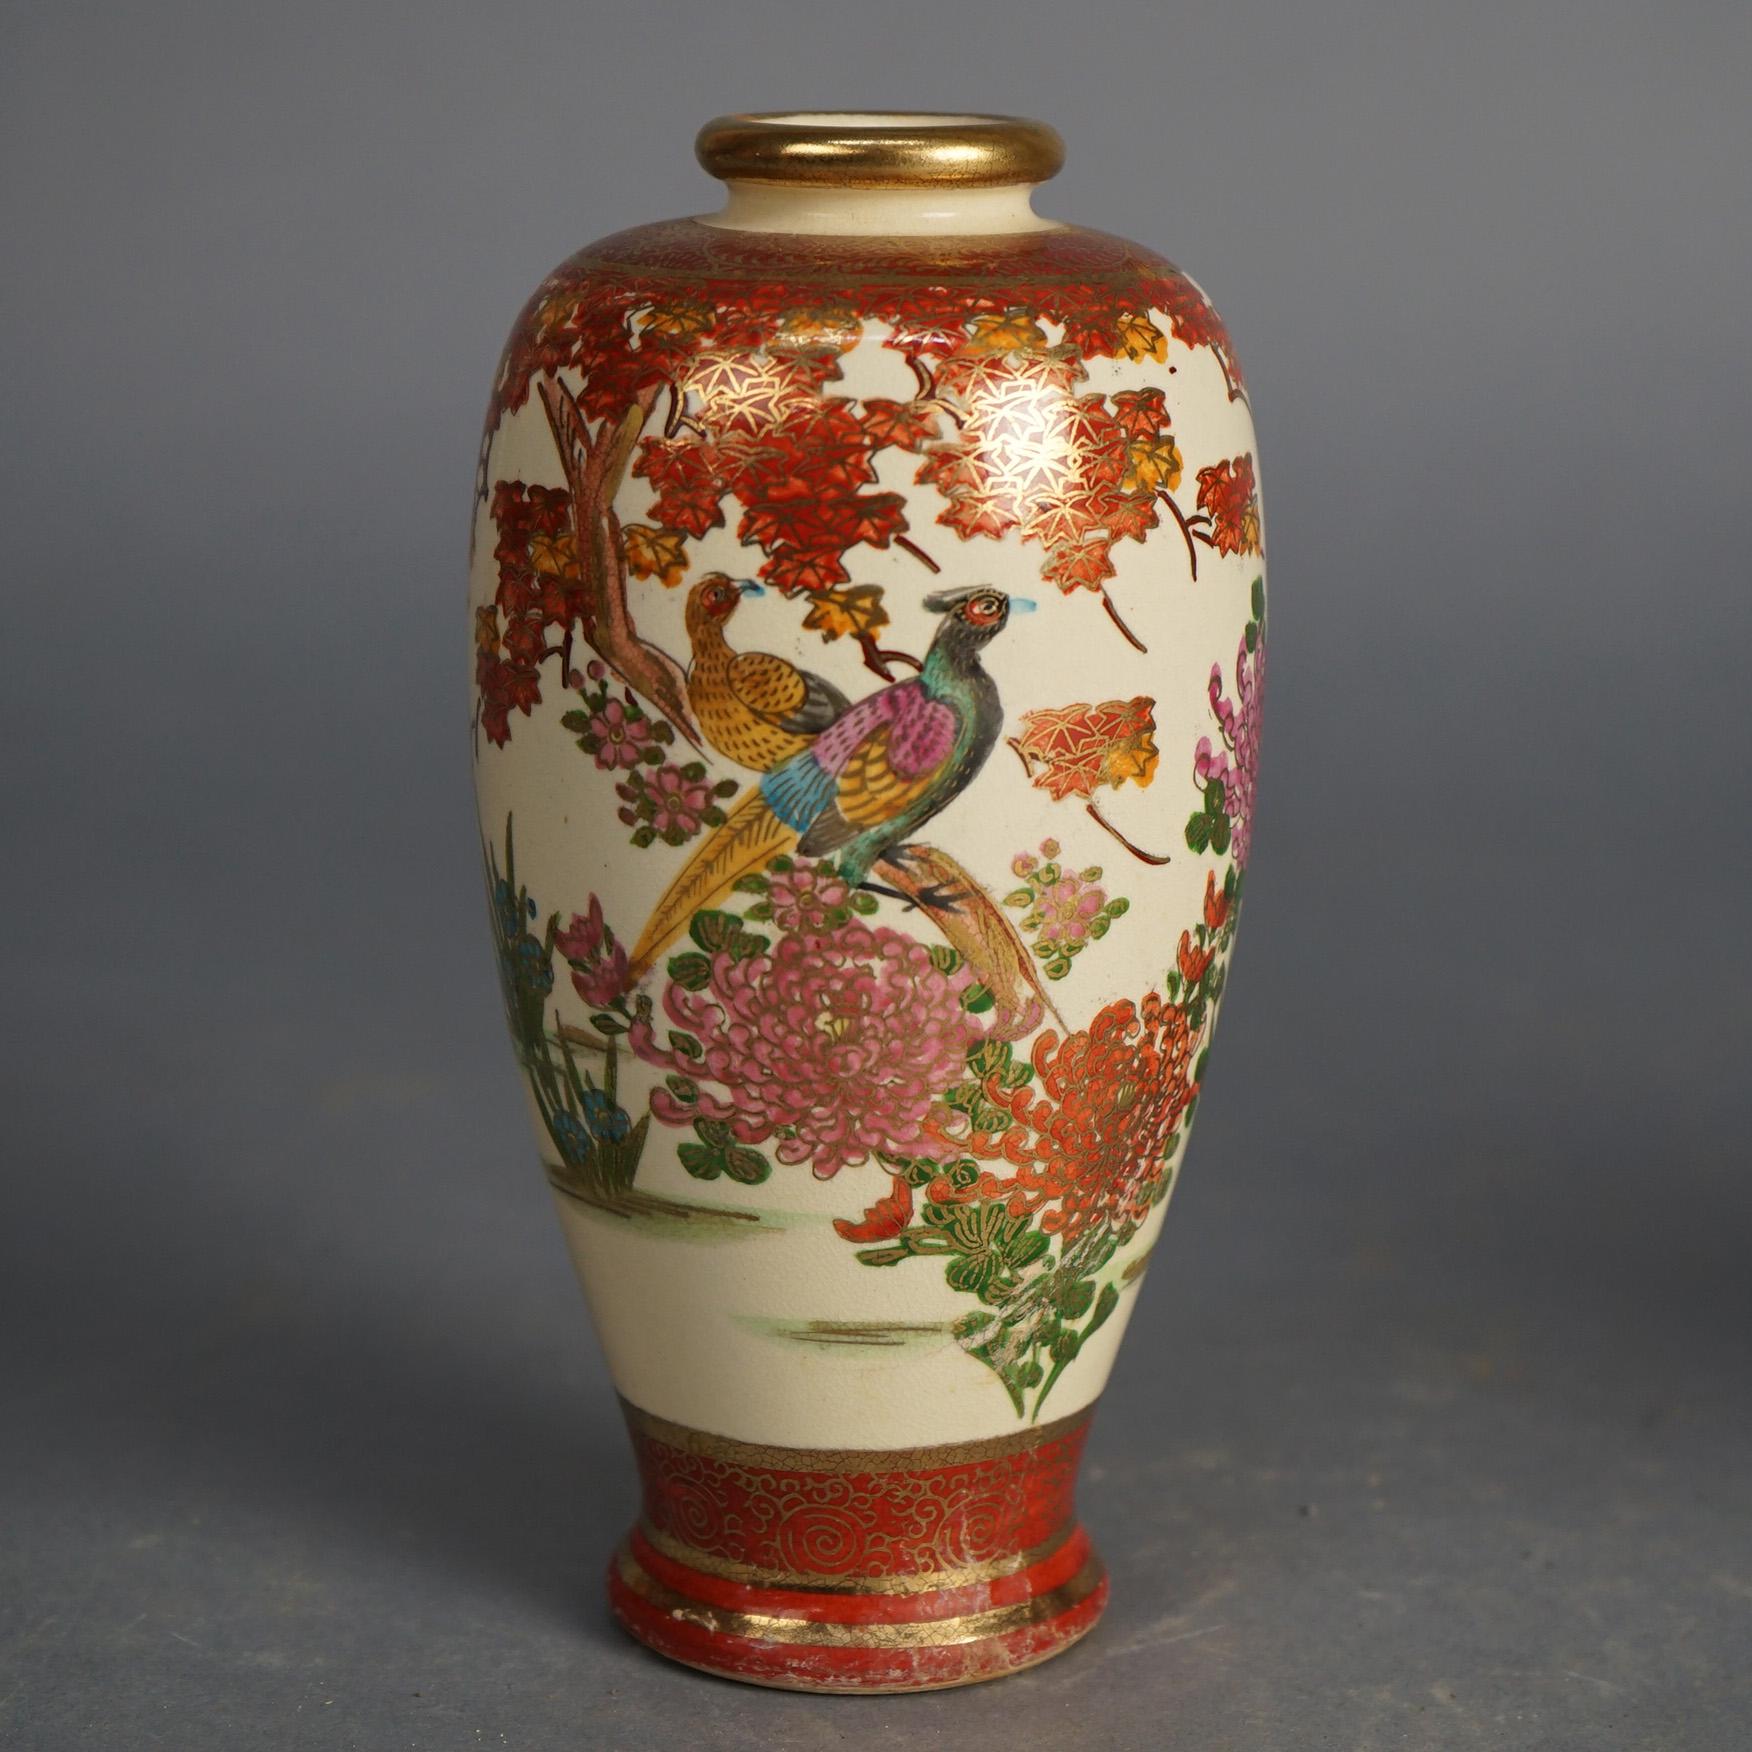 Pair Antique Japanese Satsuma Porcelain Vases wiih Hand Painted Genre & Garden Scenes and Gilt Highlights, C1920

Measures - 7.25